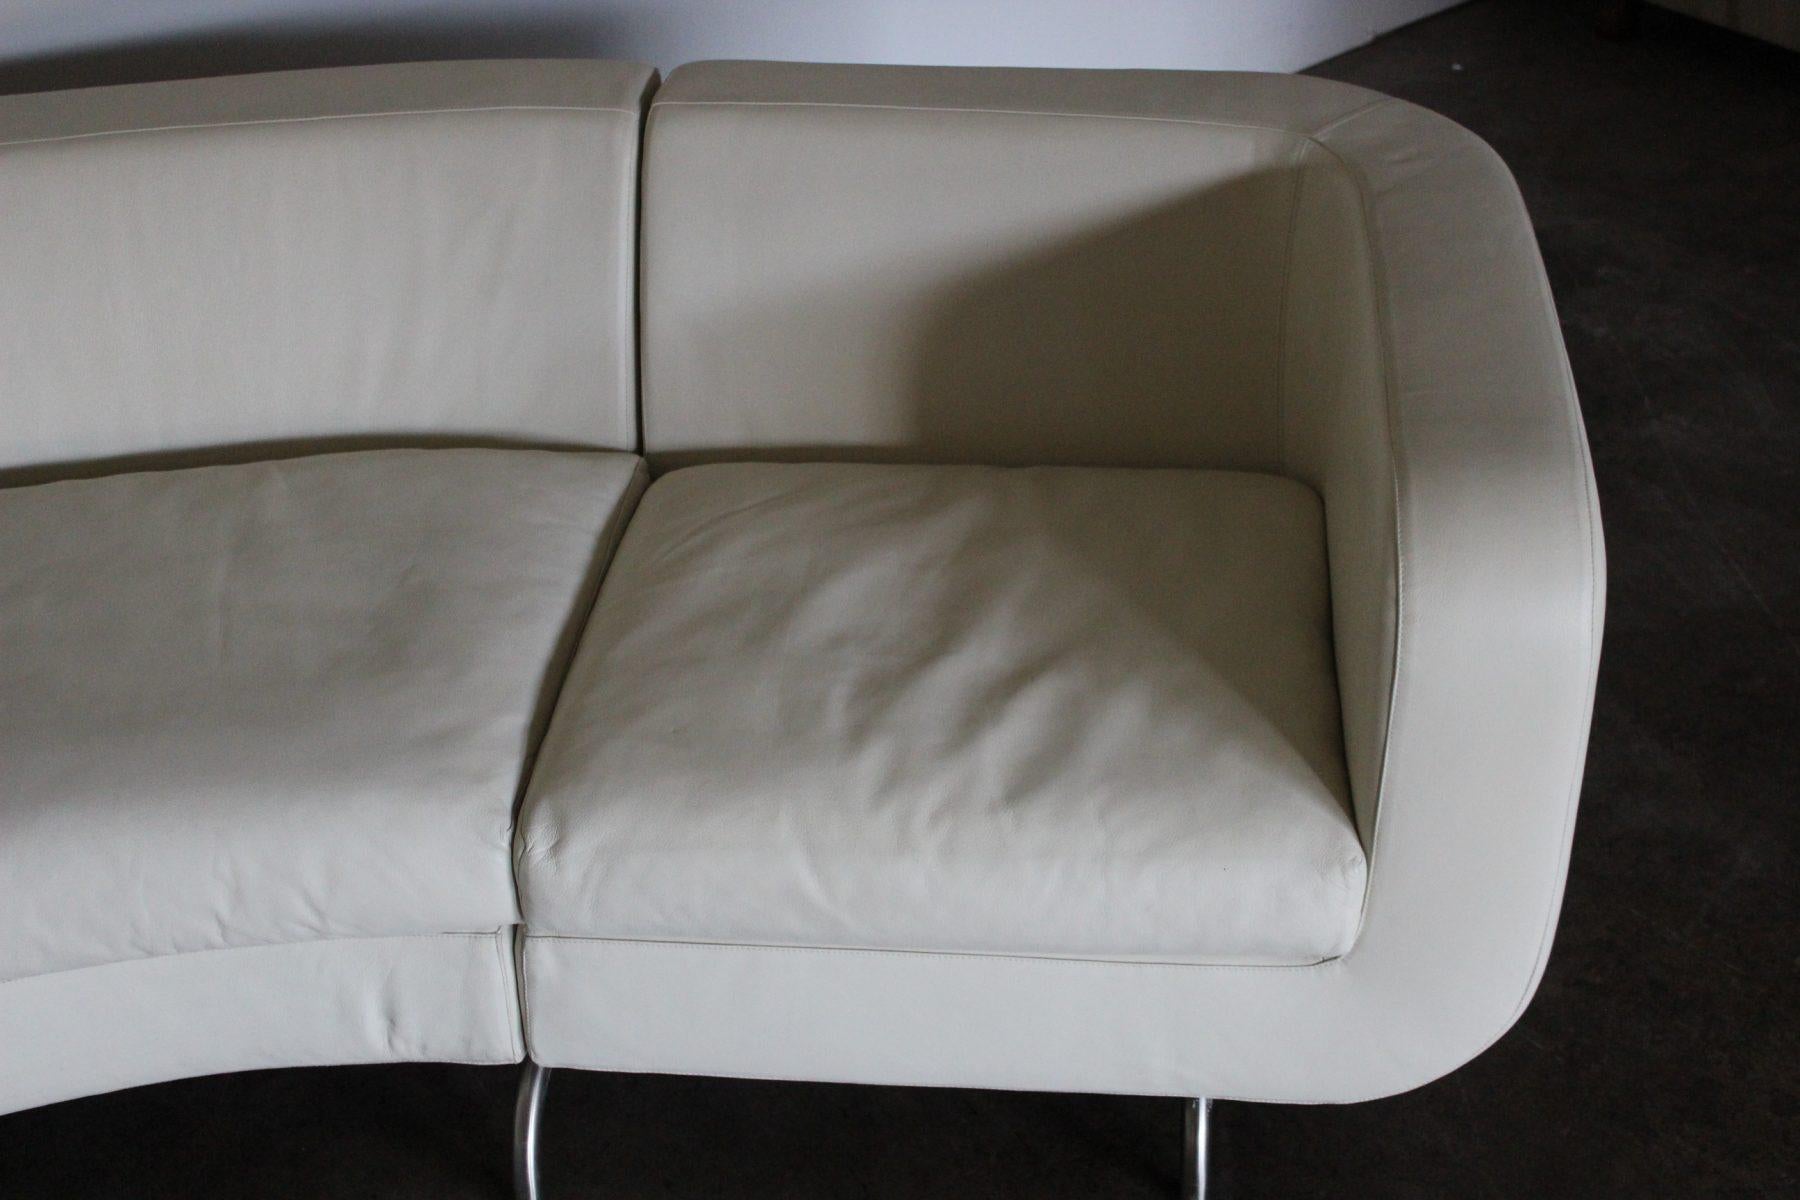 Contemporary Rare Minotti “Dubuffet” Curved Sofa, in Cream “Pelle” Leather